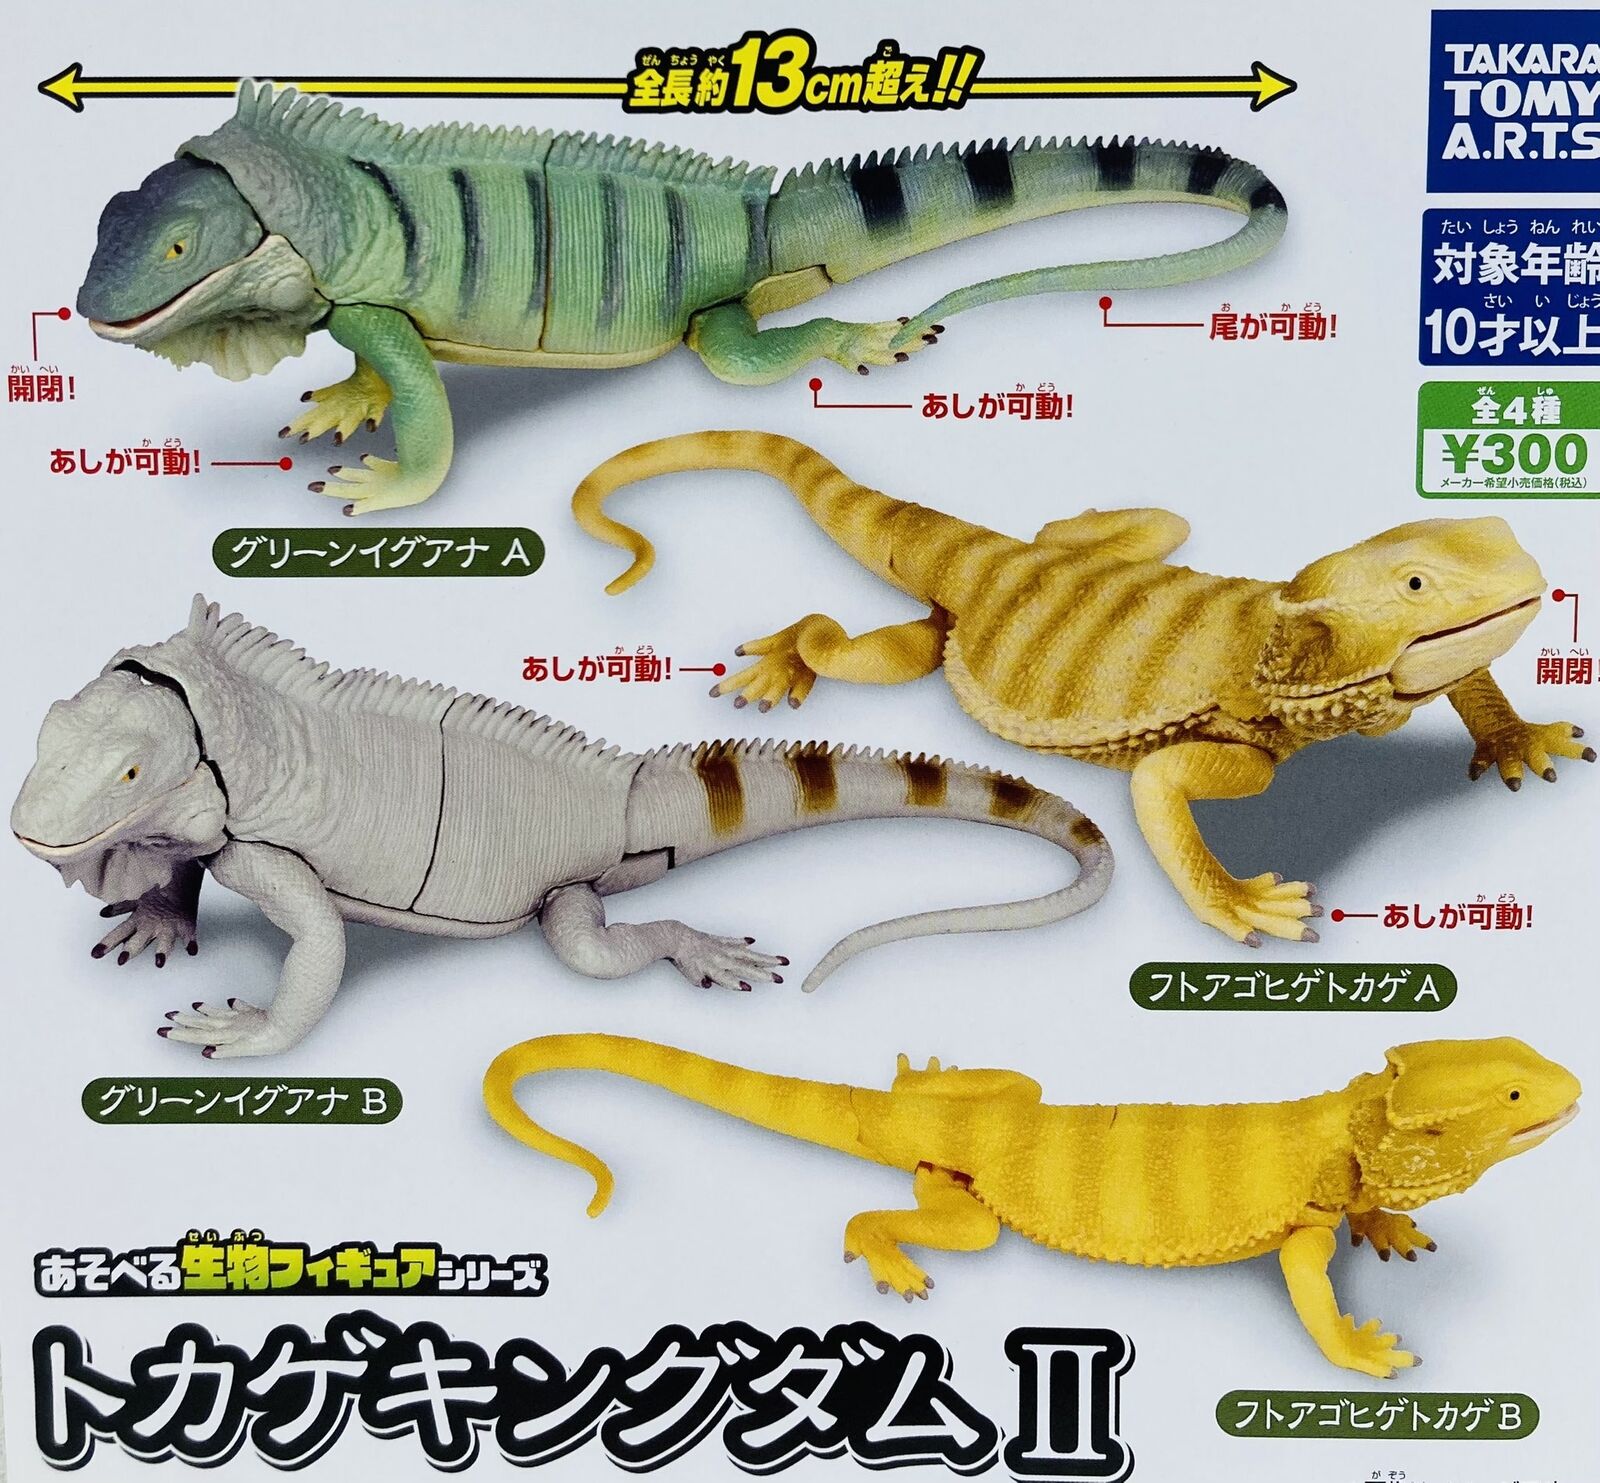 Playable Creature Figure Lizard Kingdom 2 4Types (Gacha Gasha Complete) 116Y